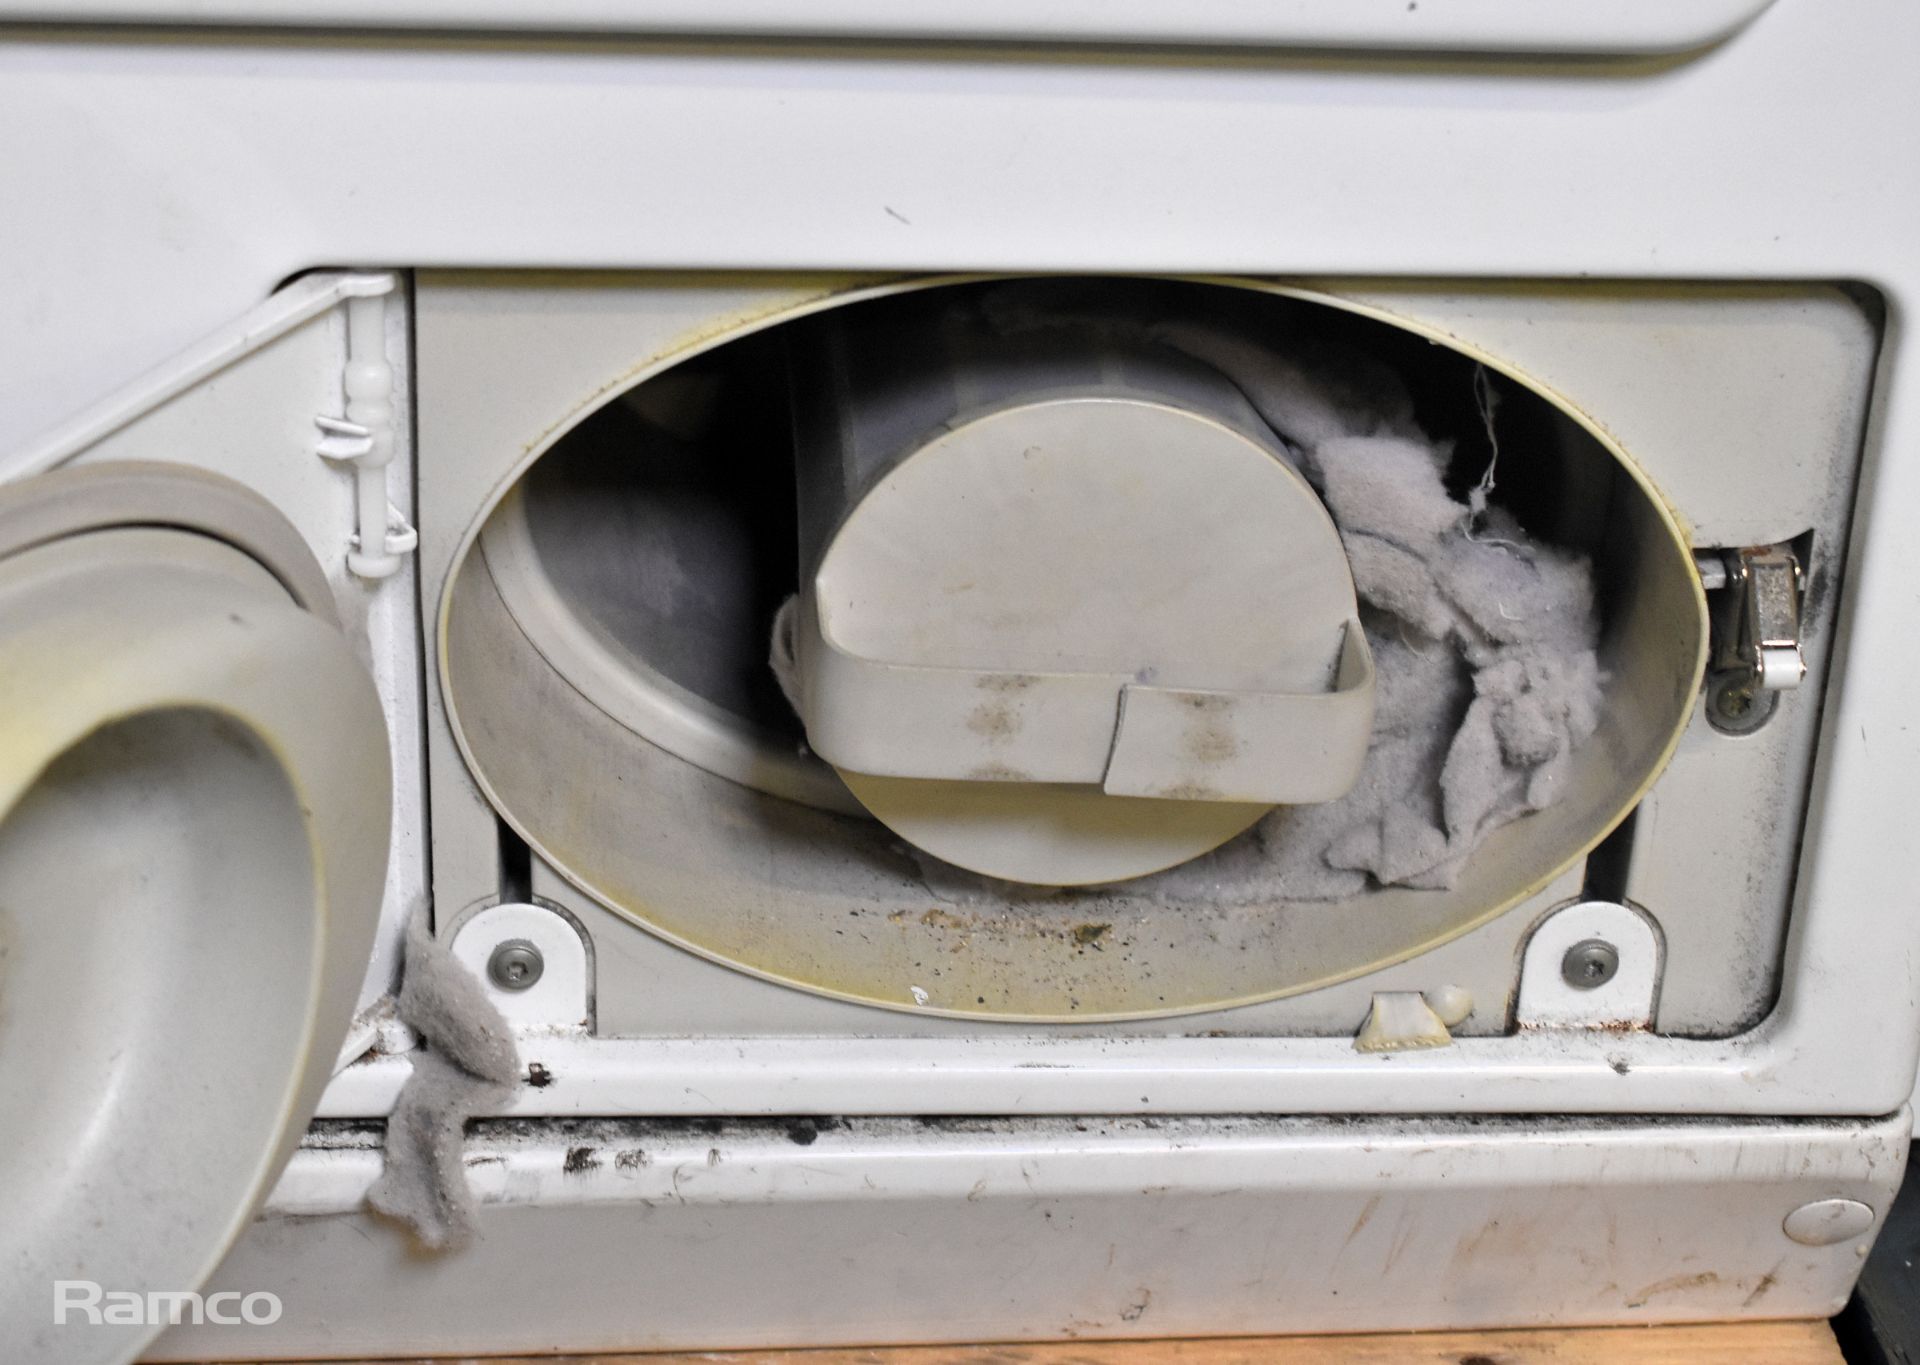 Miele PT 7136 6.5kg vented tumble dryer - W 595 x D 700 x H 850mm - DAMAGED KICK PLATE - Image 5 of 5